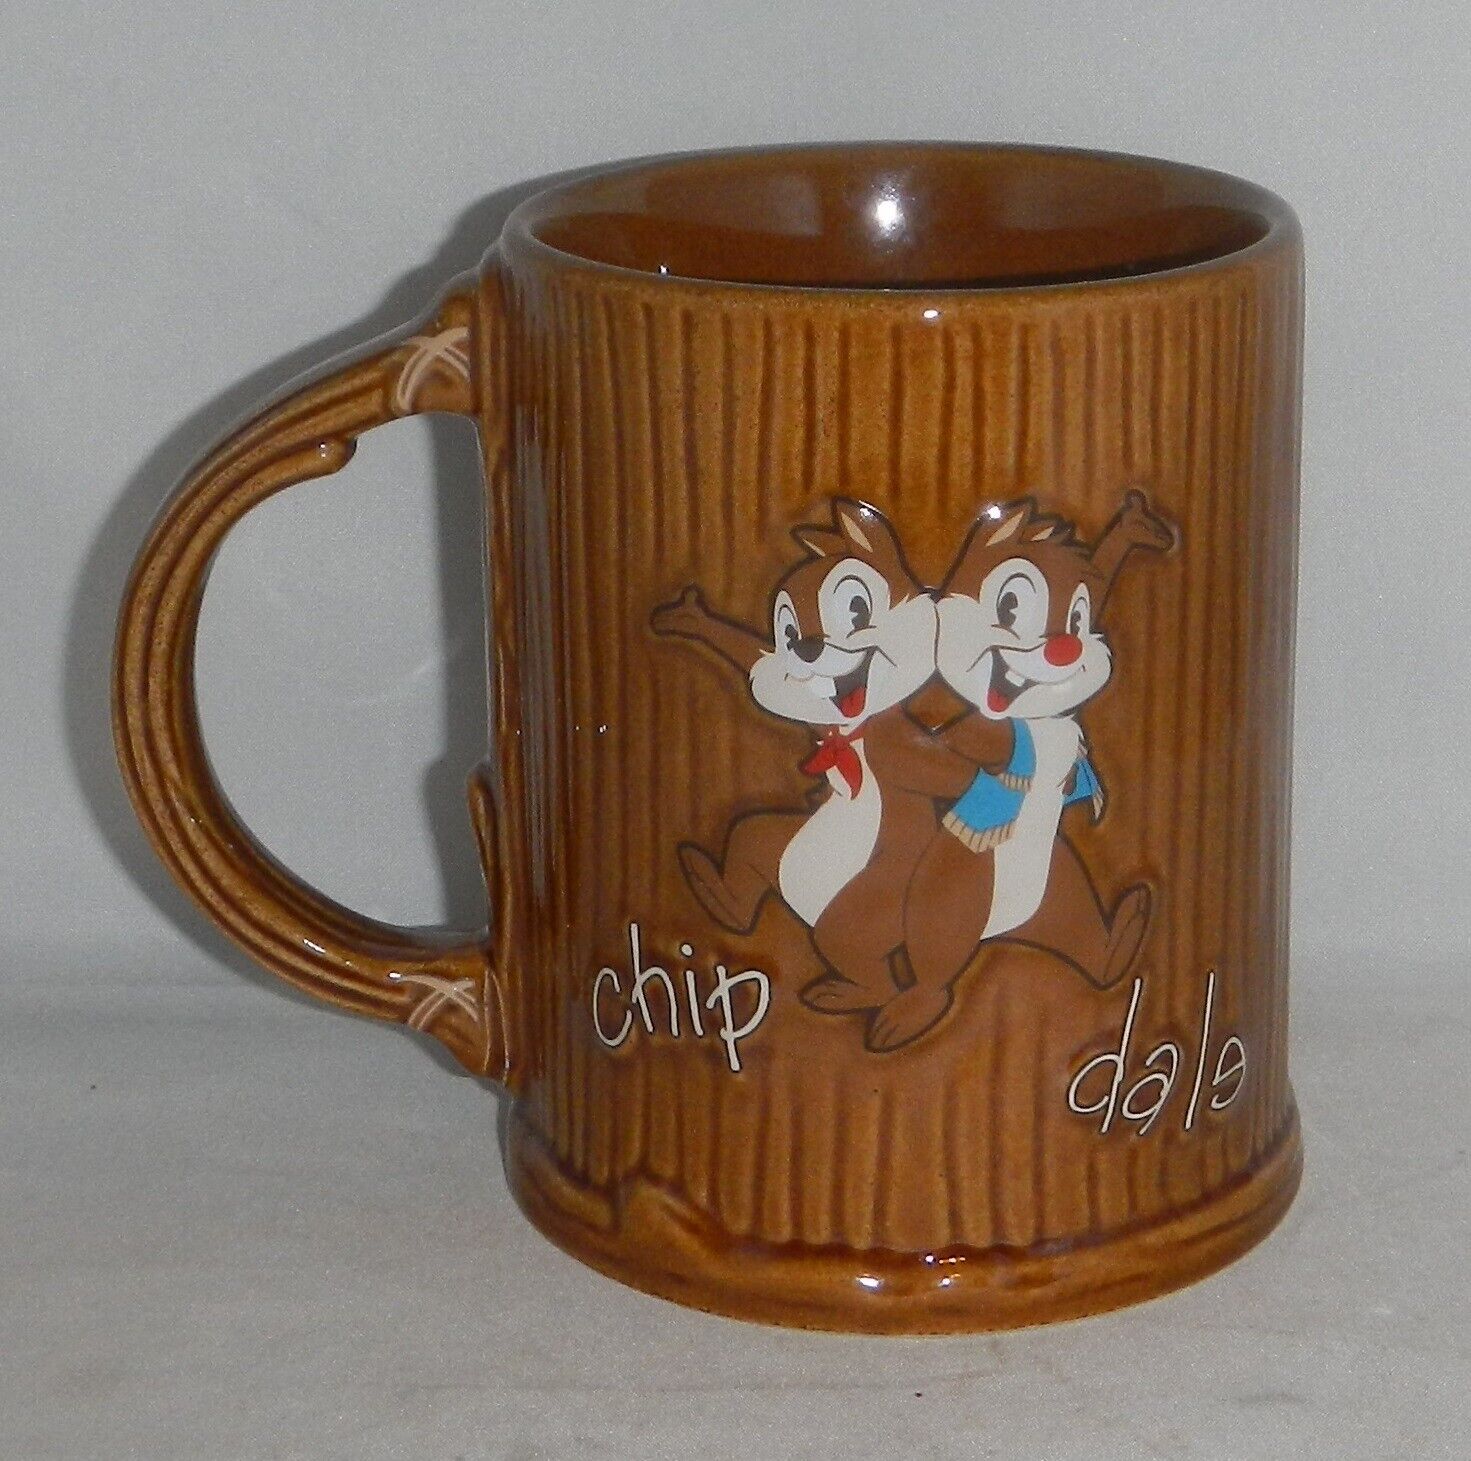 2021 Walt Disney World 50th Anniversary Fort Wilderness Chip Dale Coffee Mug Cup